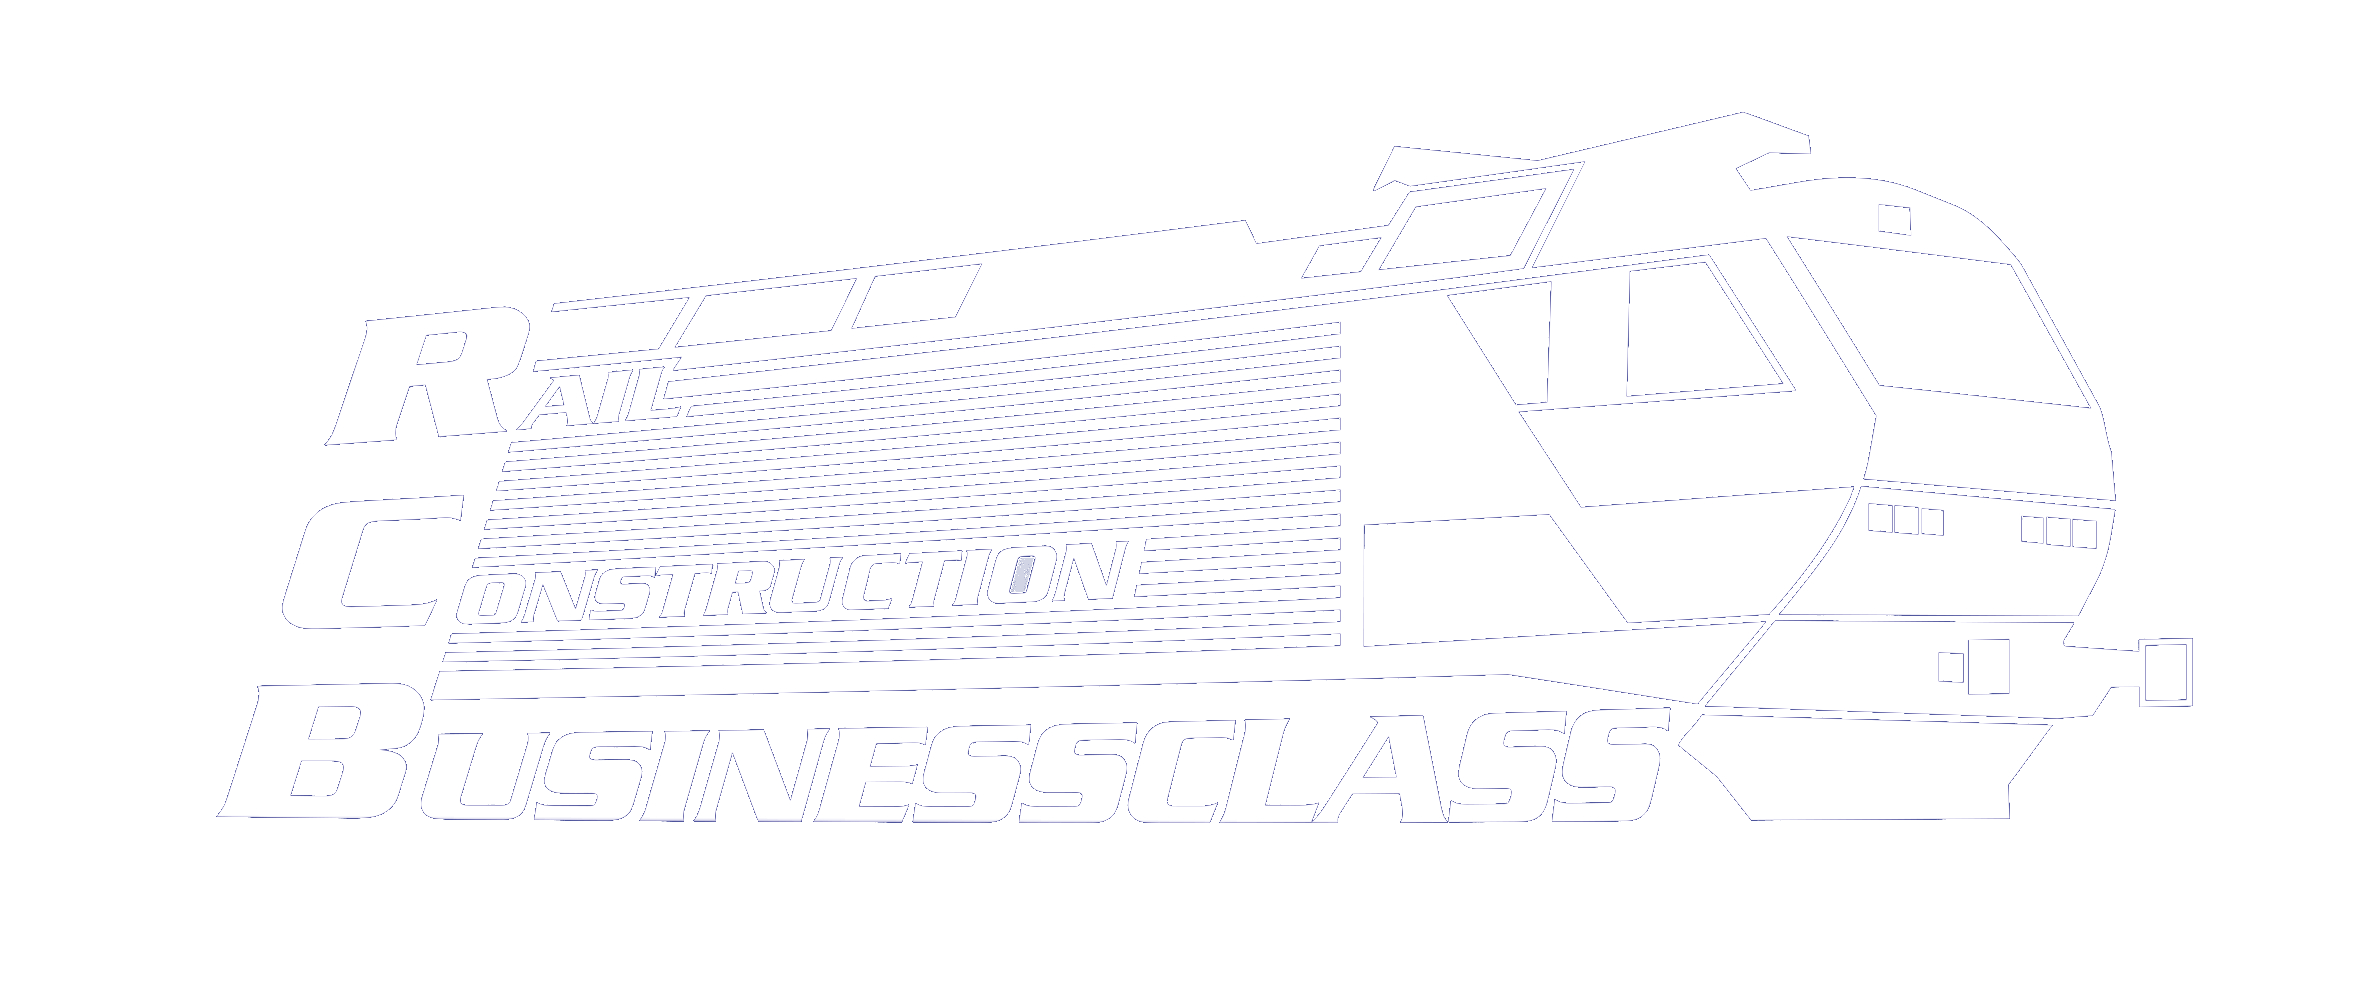 RC BusinessClass